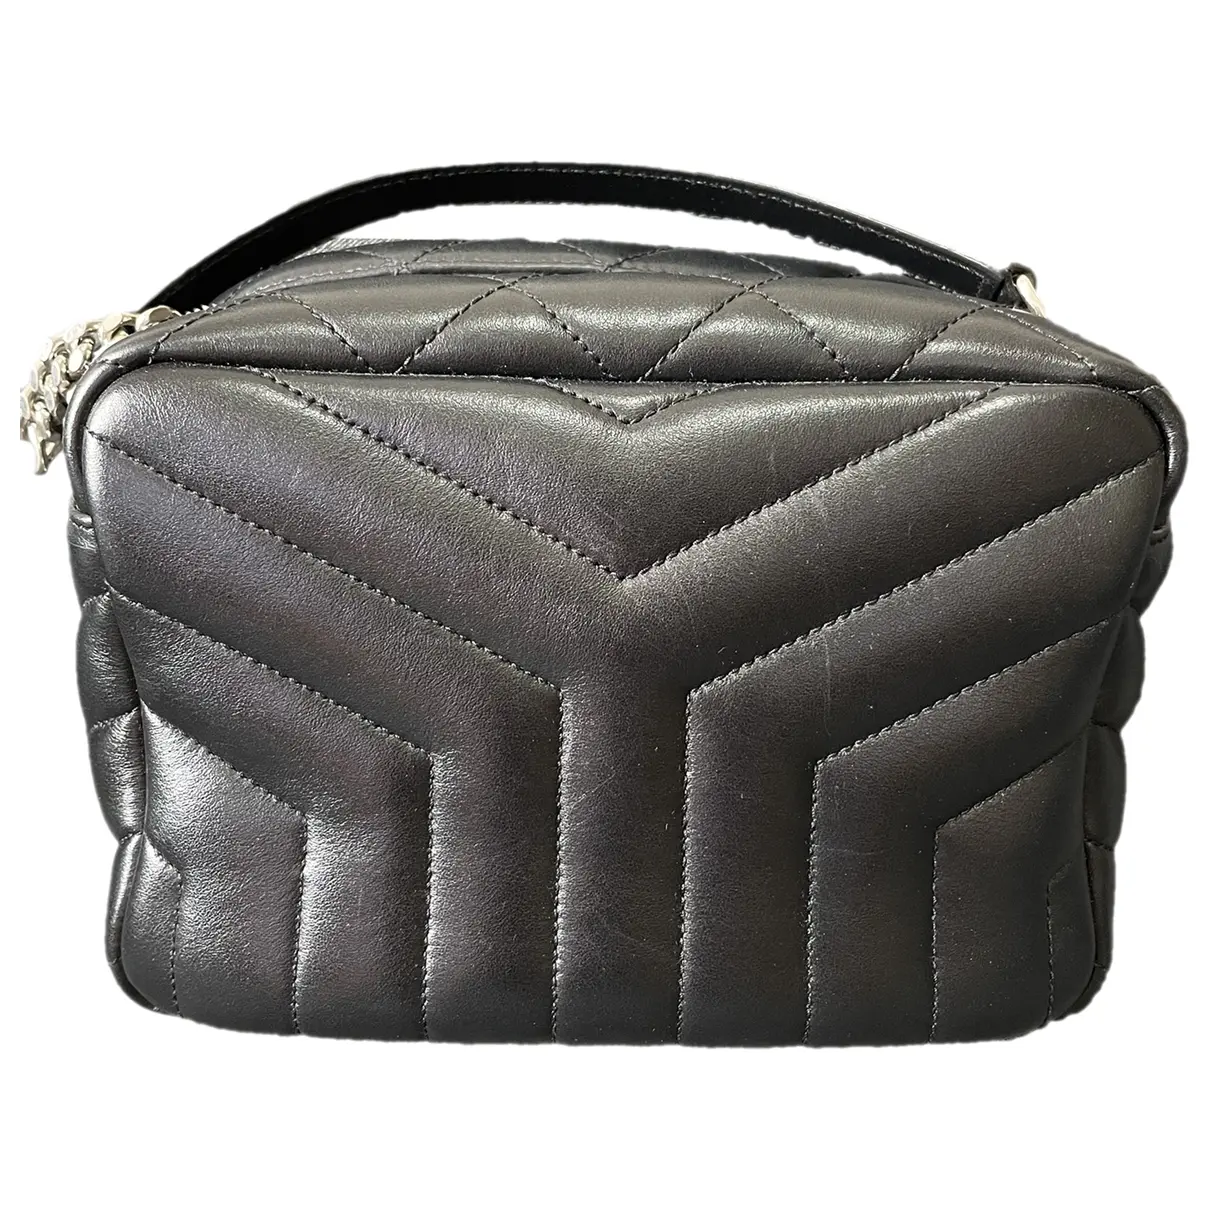 Lulu leather crossbody bag